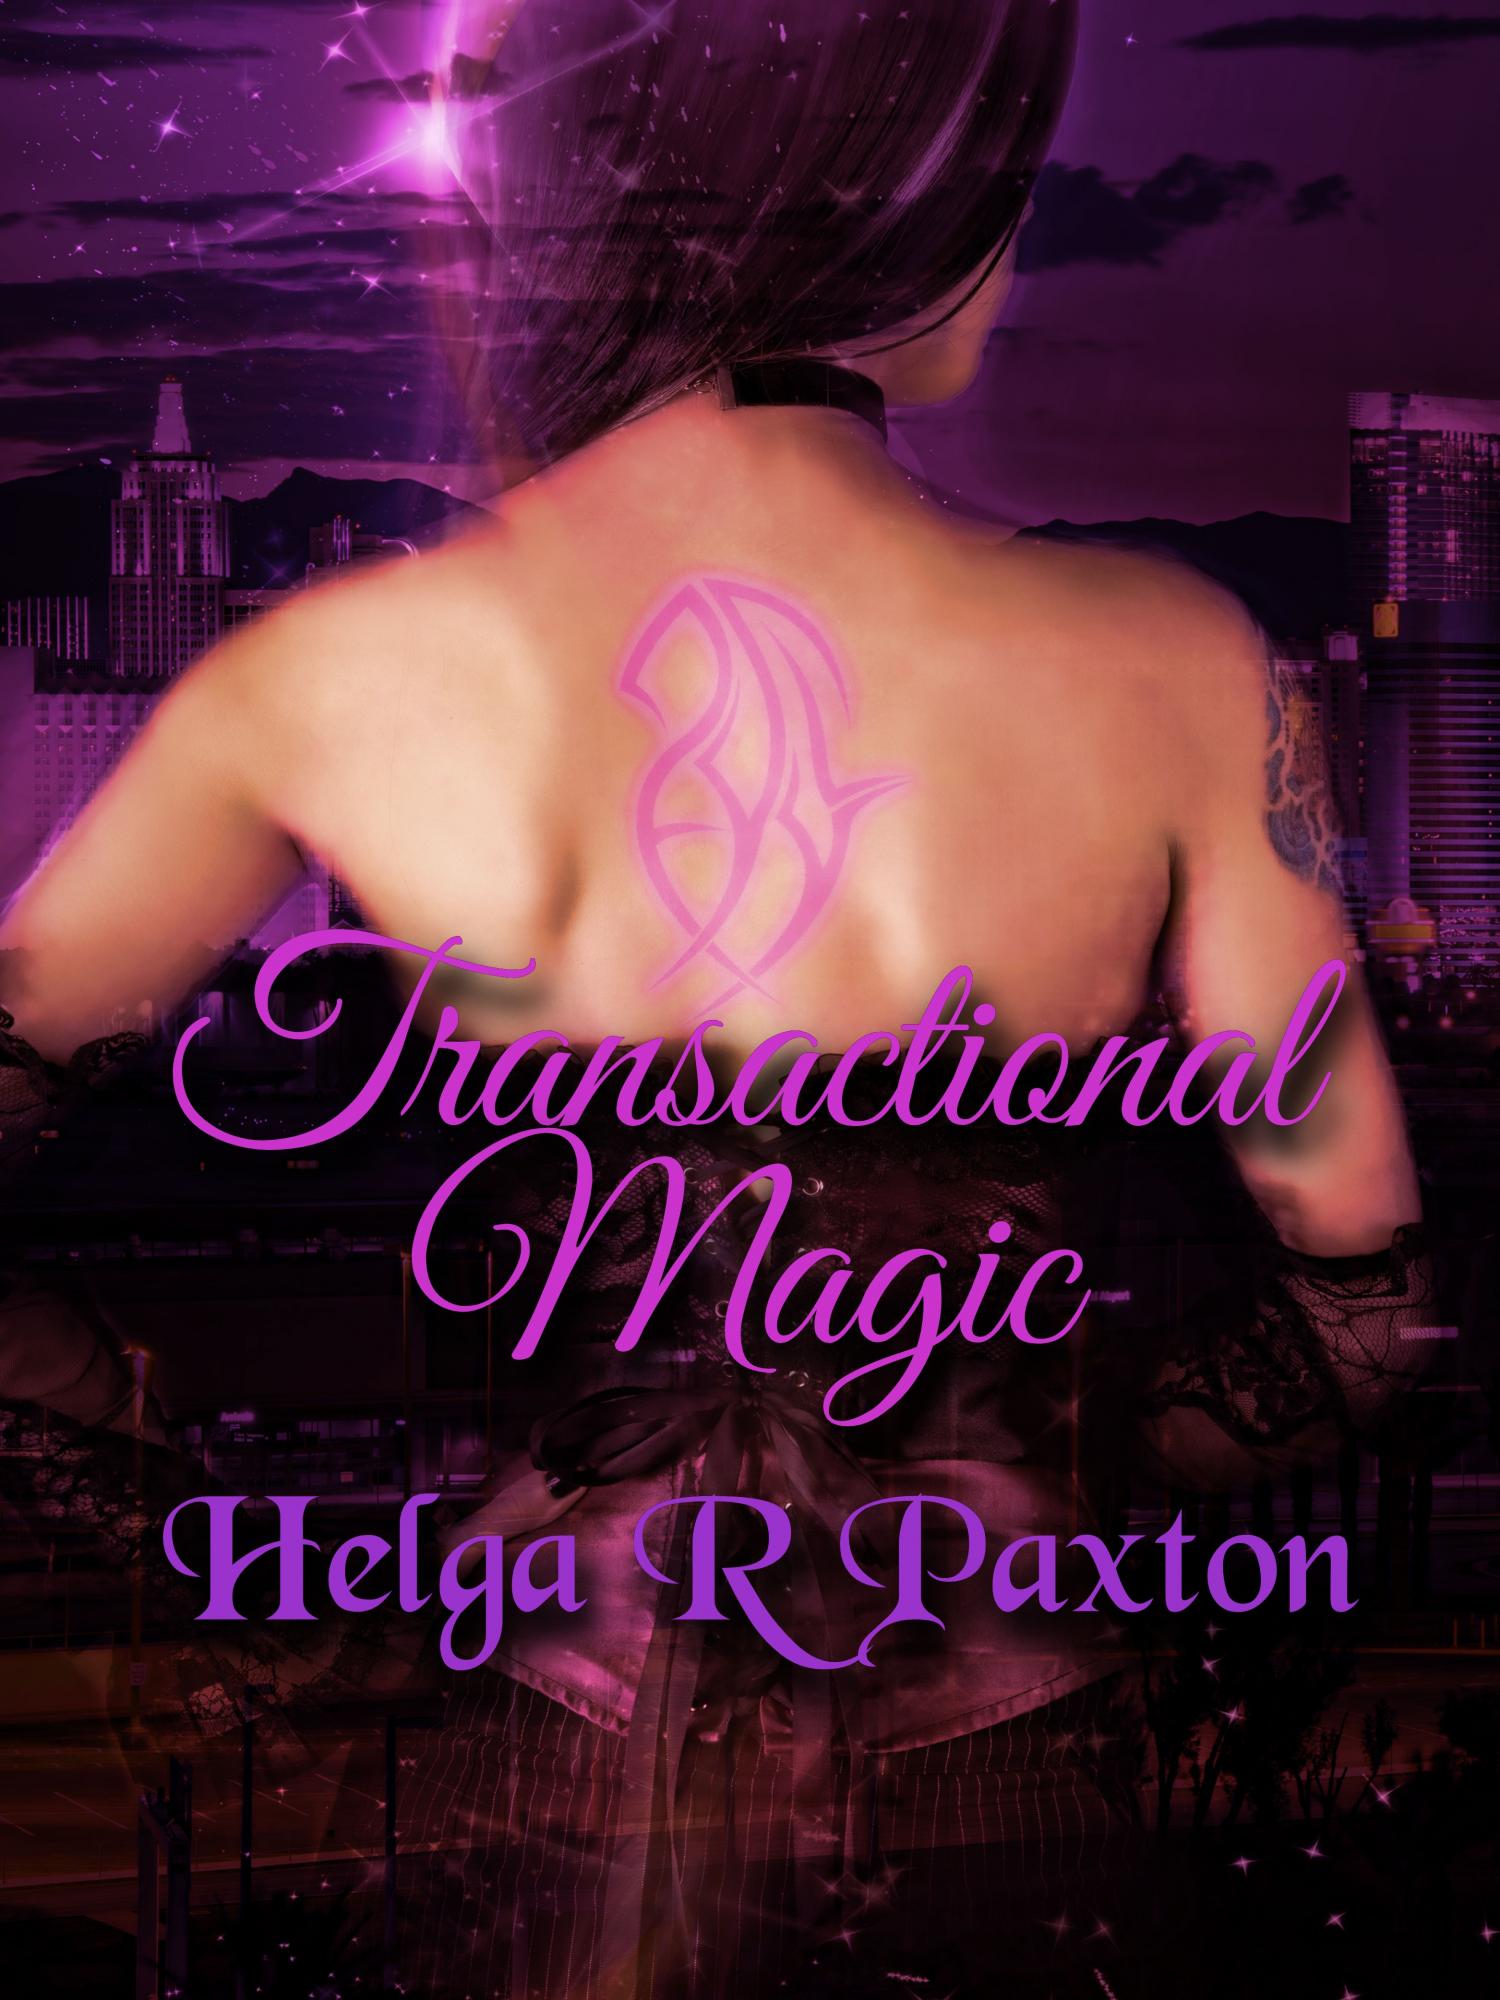 Transactional Magic by Helga R Paxton 9-December-2019